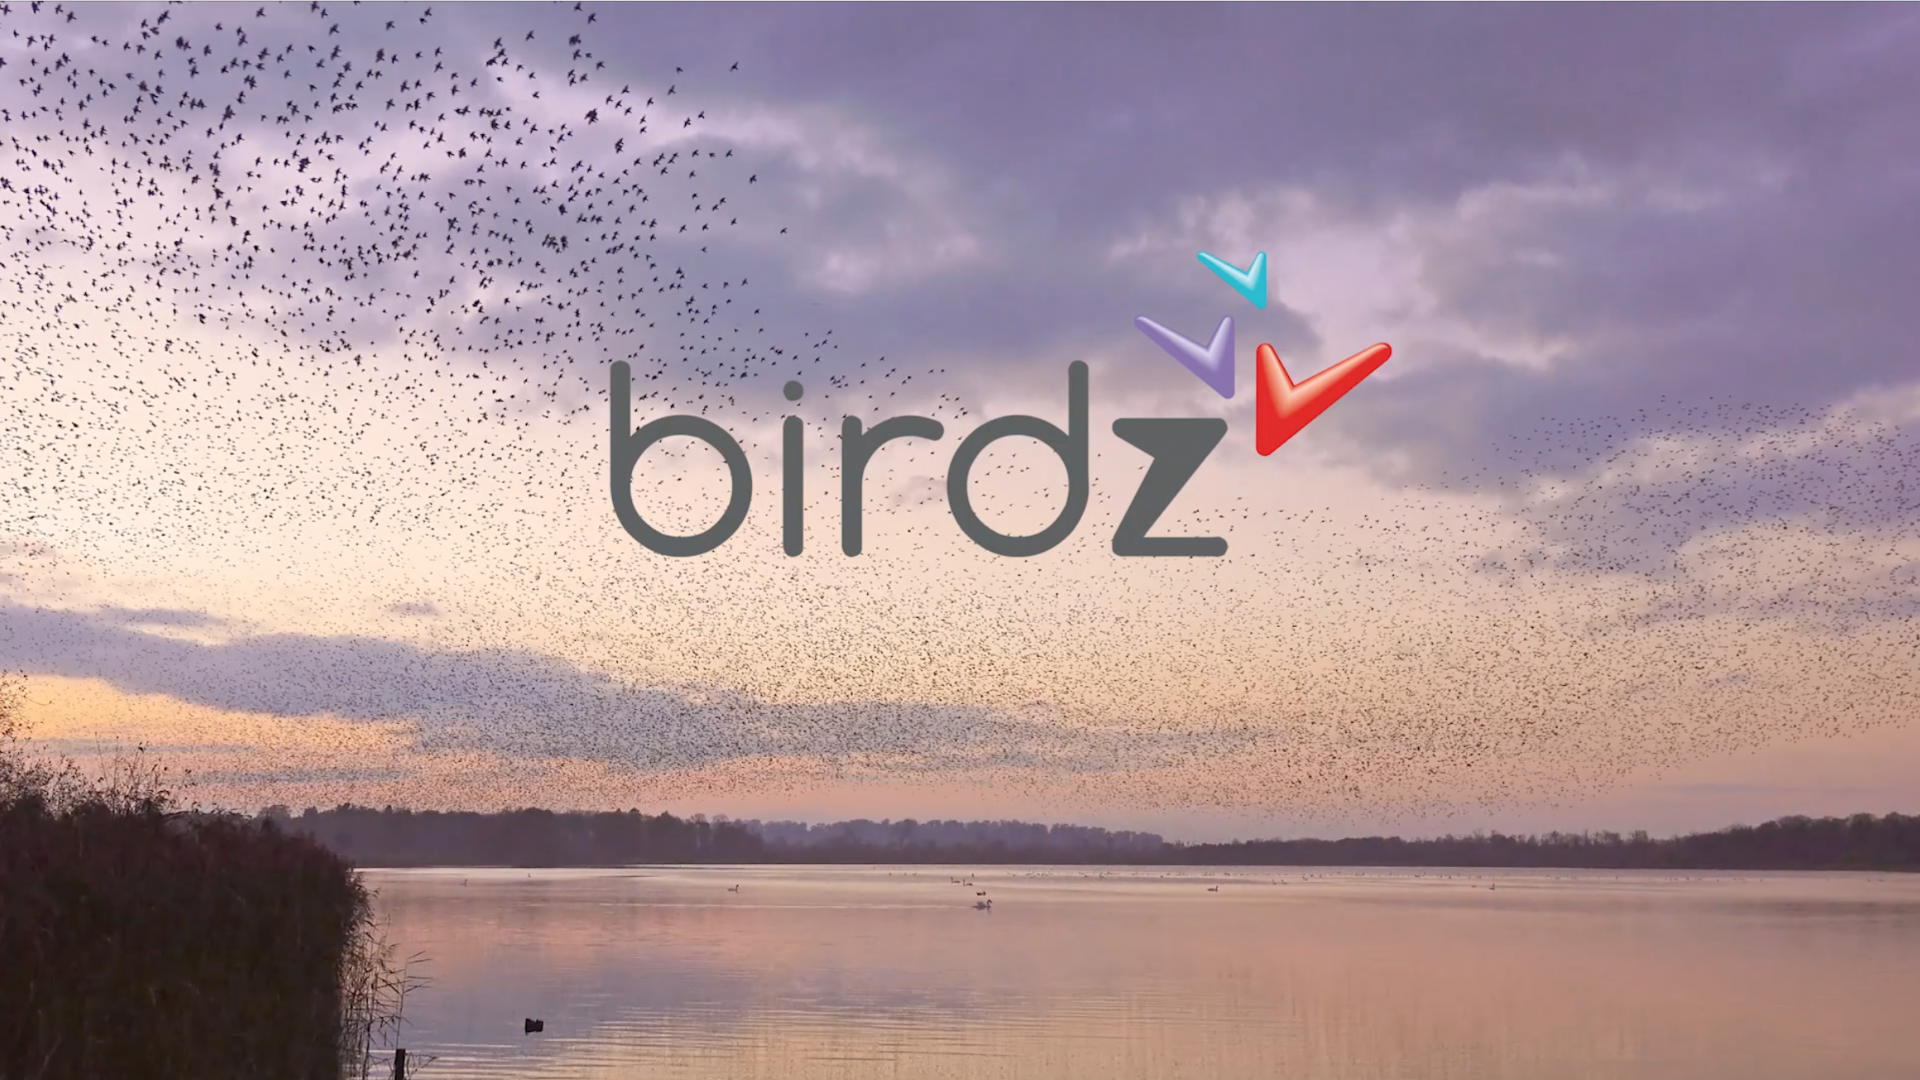 Birdz